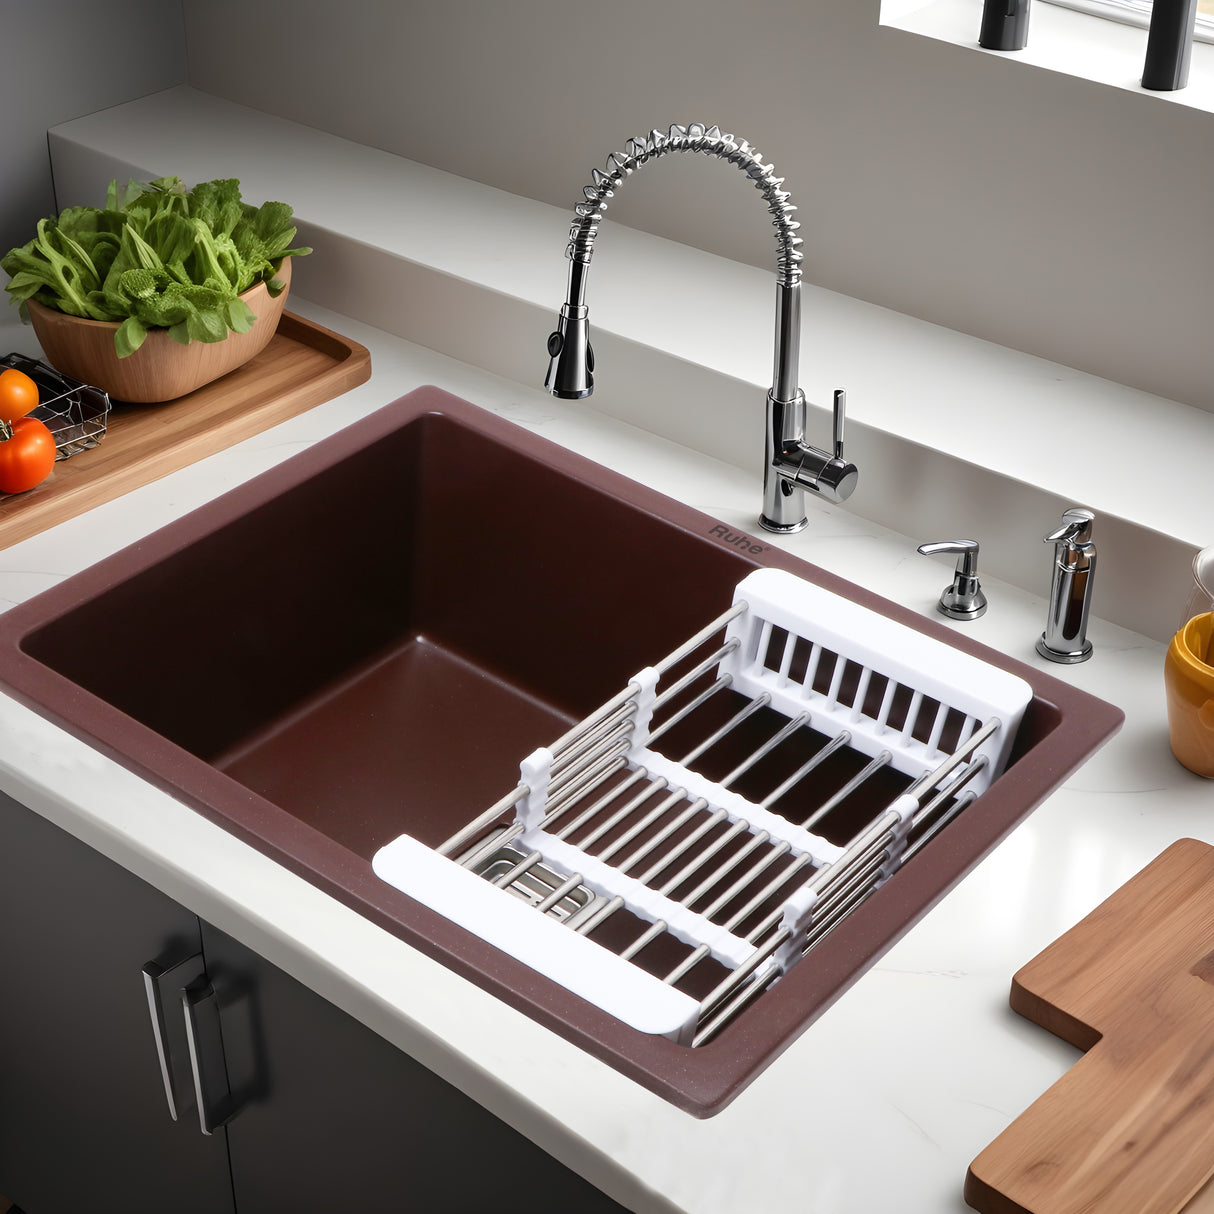 Quartz Single Bowl Kitchen Sink - Choco Brown (21 x 18 x 9 inches) - by Ruhe®